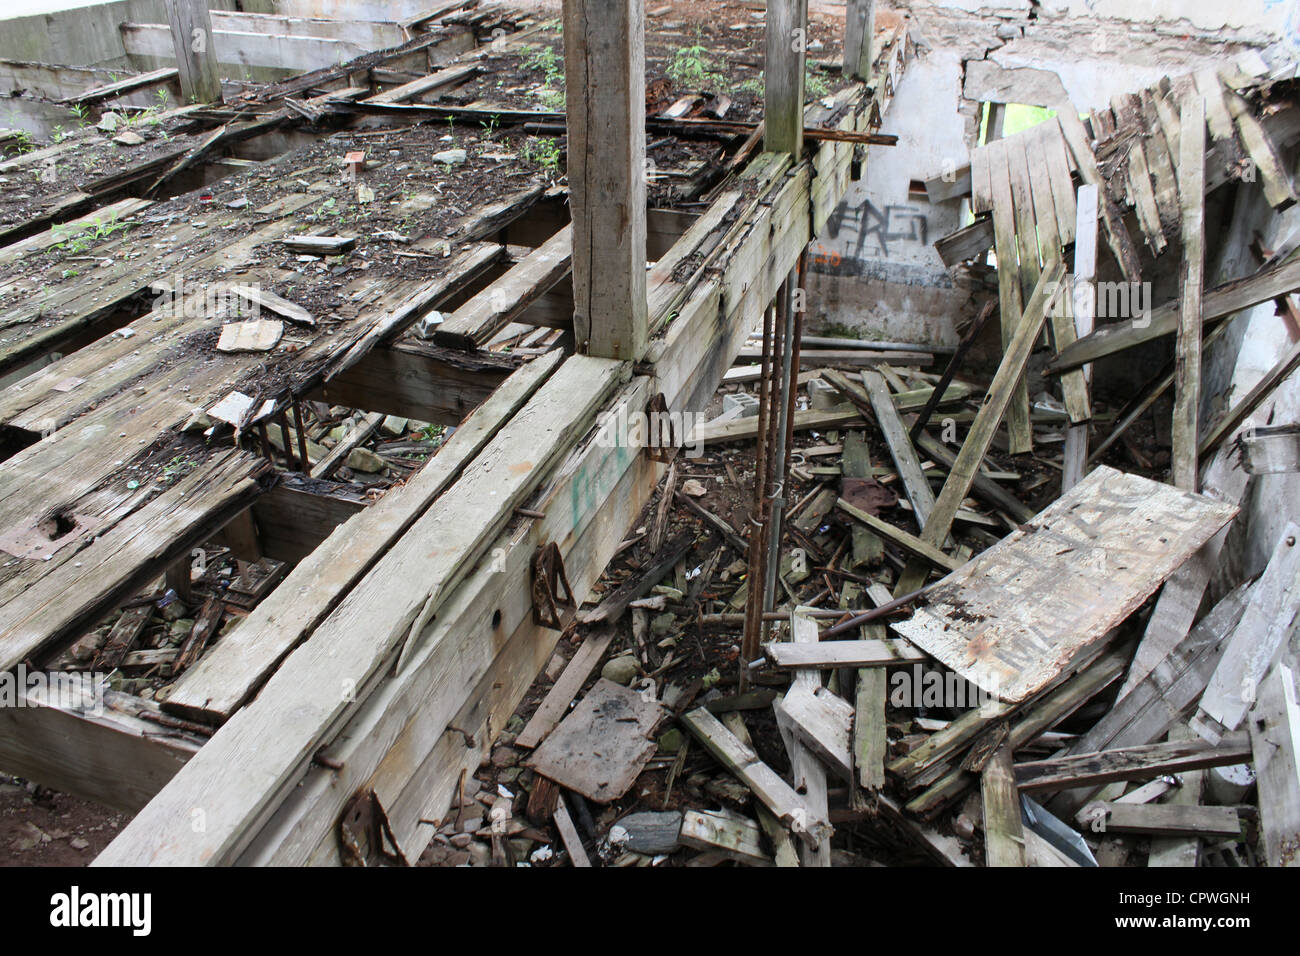 Abandon alte Fabrik Lager Industrie zu zerstören Stockfoto